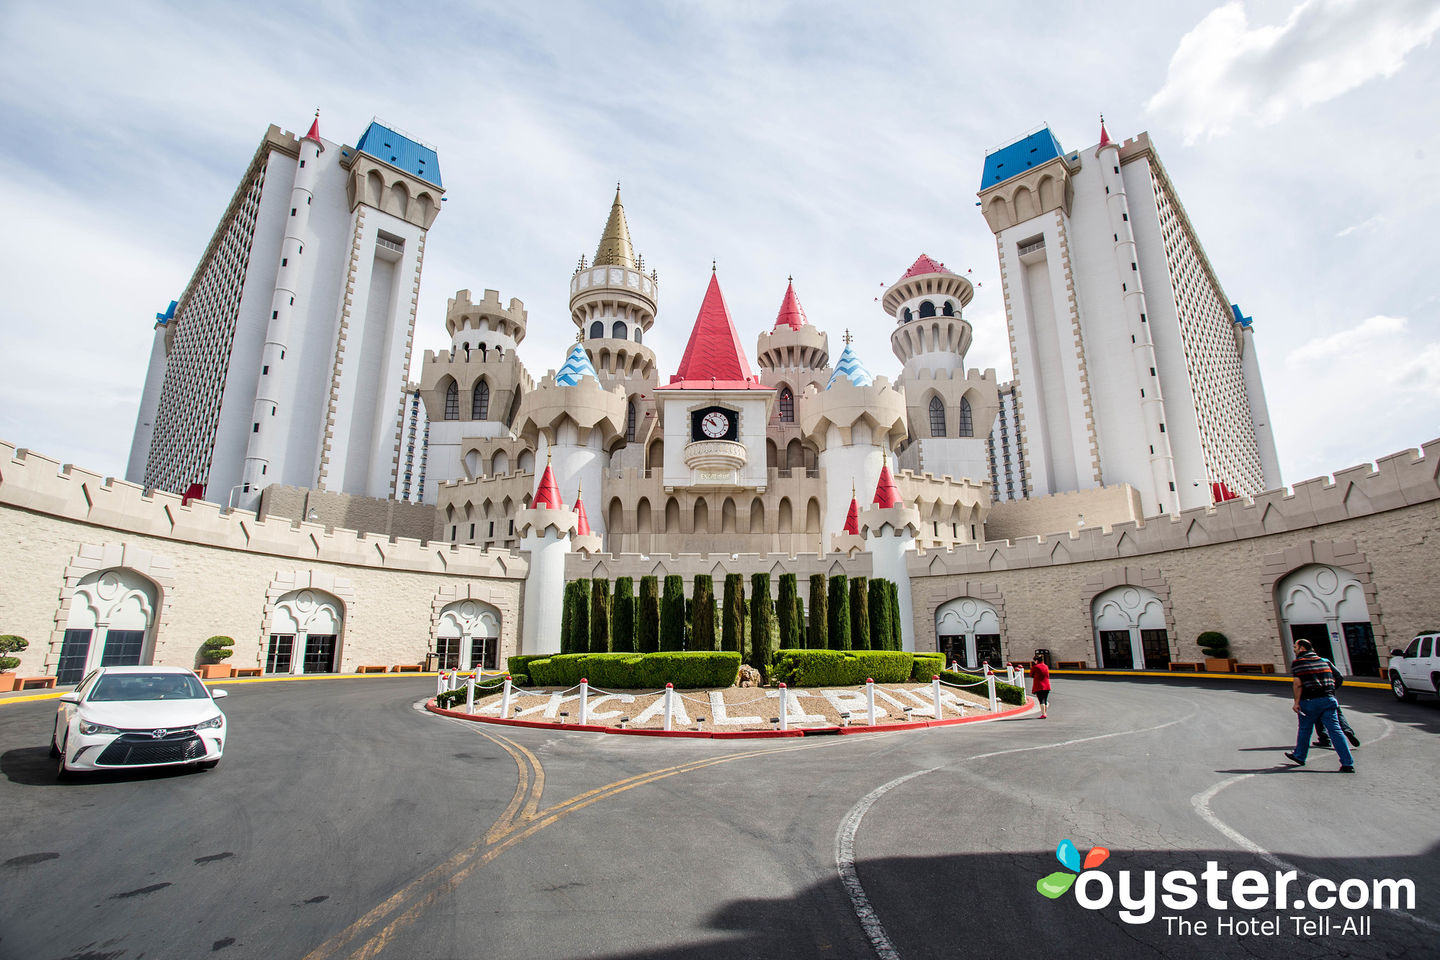 excalibur hotel casino daily resort fee